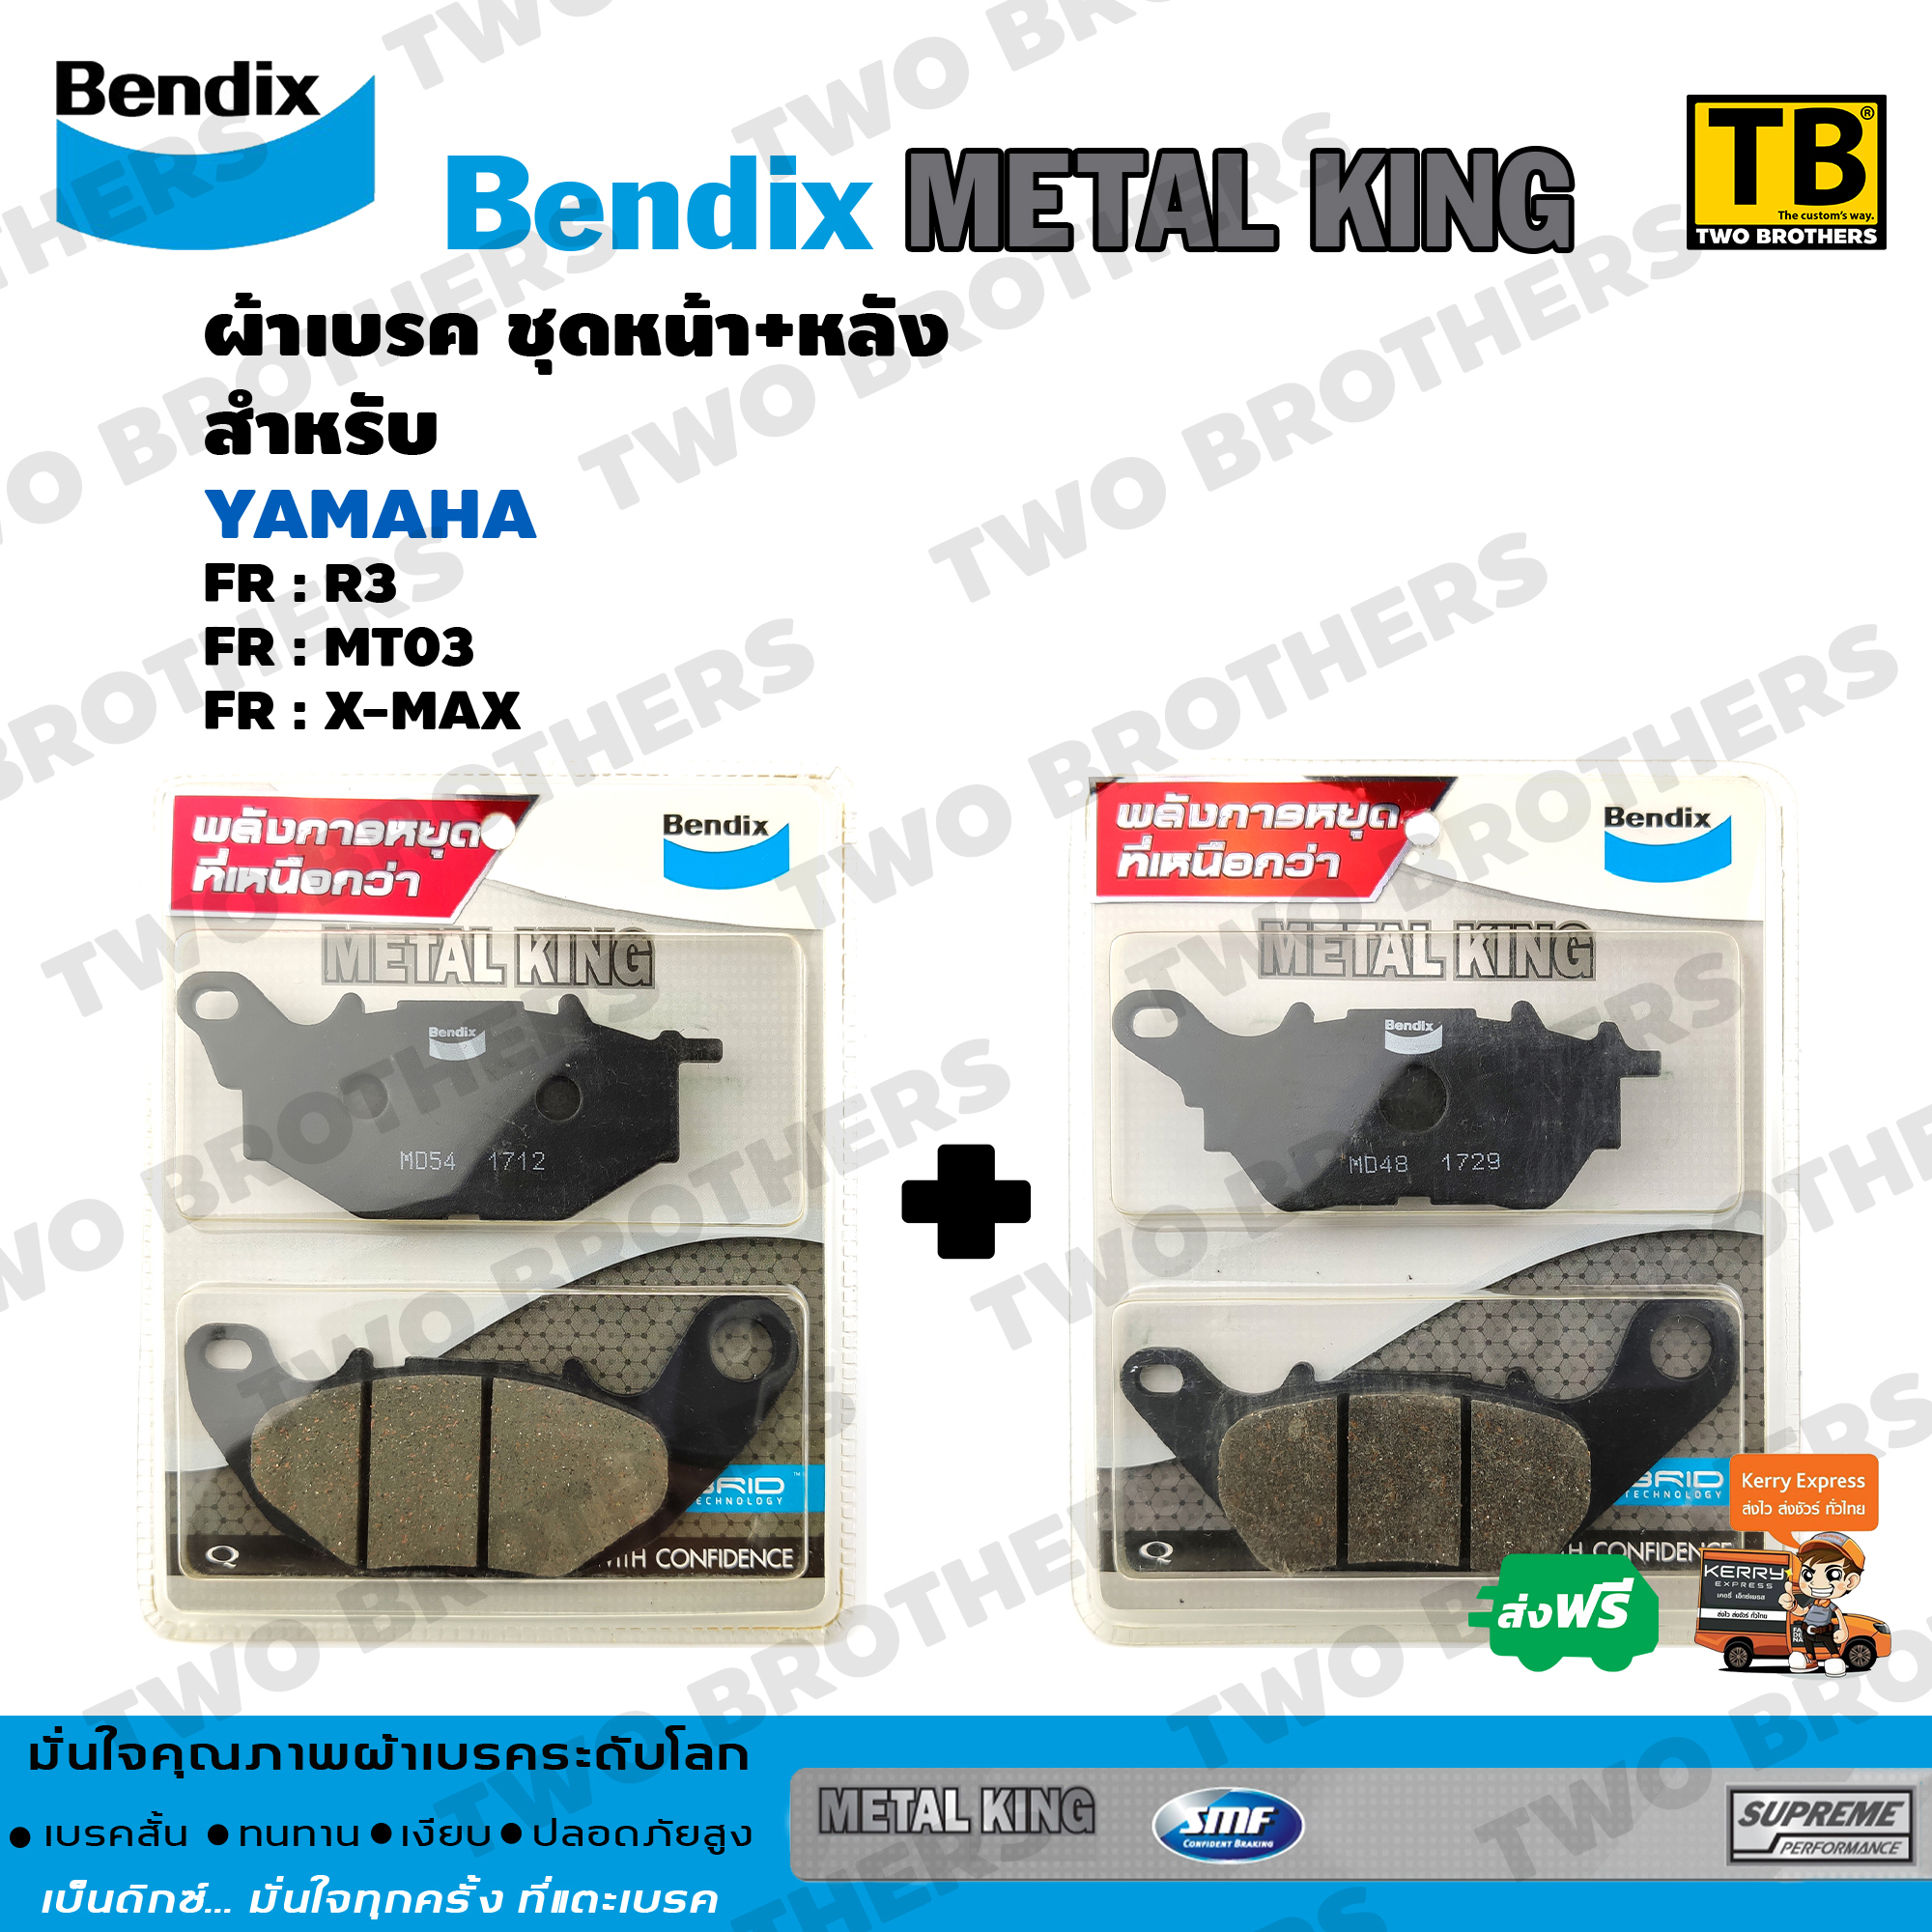 Bendix Metal King ผ้าเบรคชุดทั้งคัน R3, MT03, X-MAX (หน้า+หลัง) (MK54-MK48)